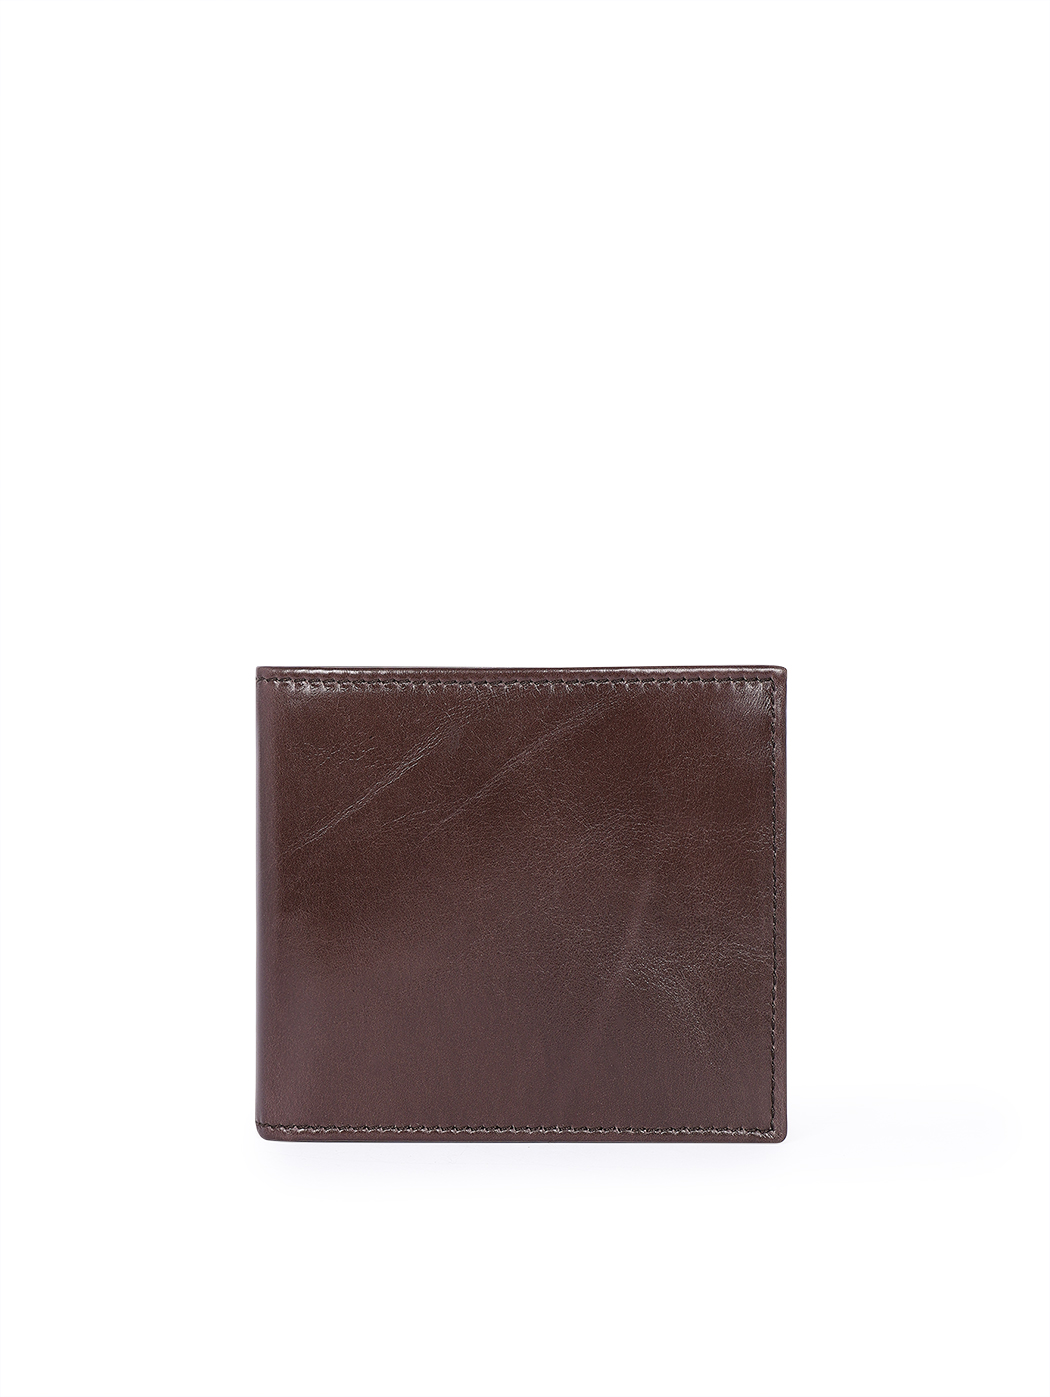 Pebble Leather Billfold Coin Pocket Wallet Dark Brown